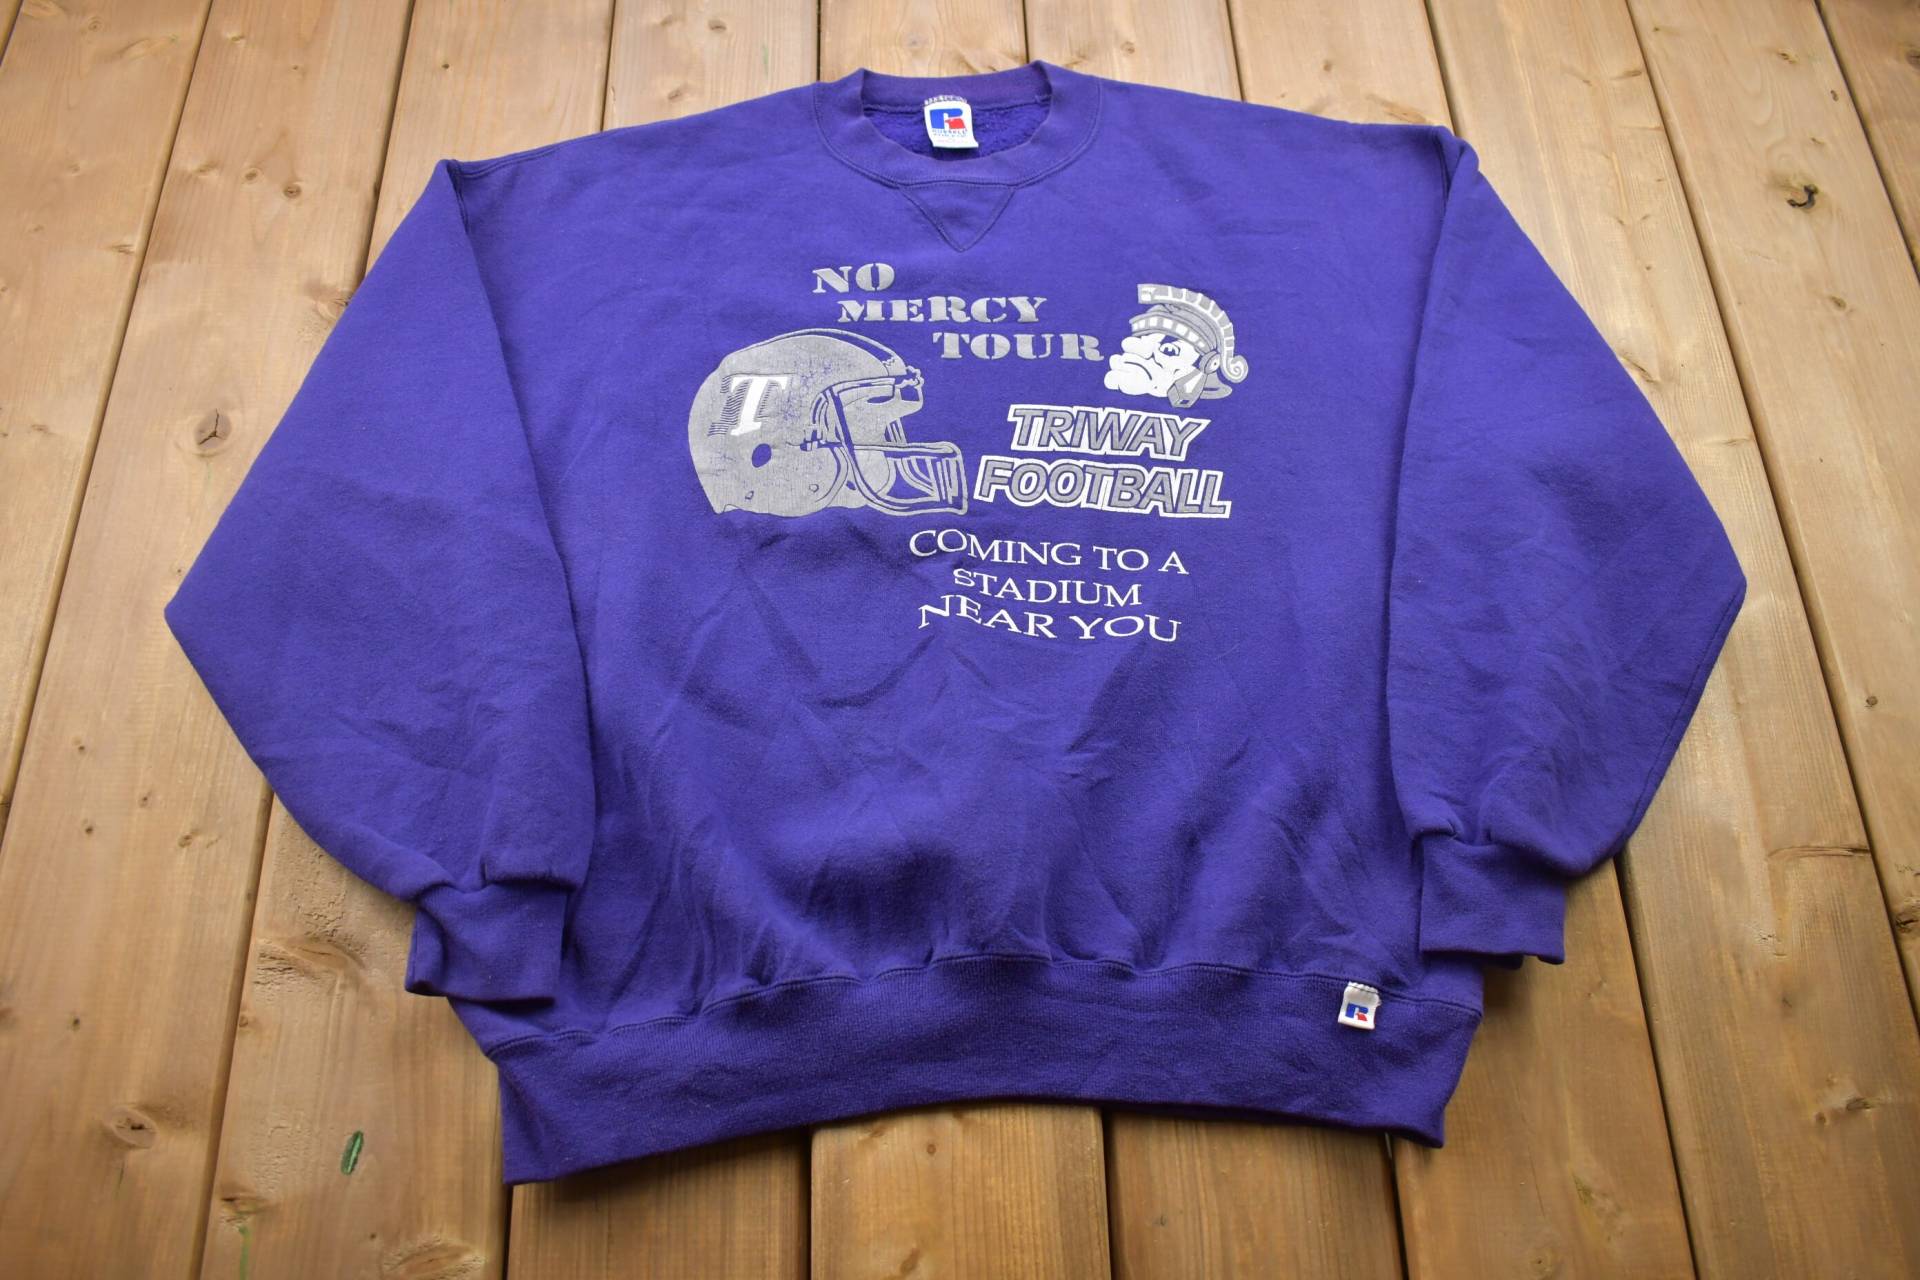 Vintage 1990S Russell Athletic No Mercy Tour Triway Football Rundhals-Sweatshirt/Made in Usa Souvenir Athleisure Rare von Lostboysvintage